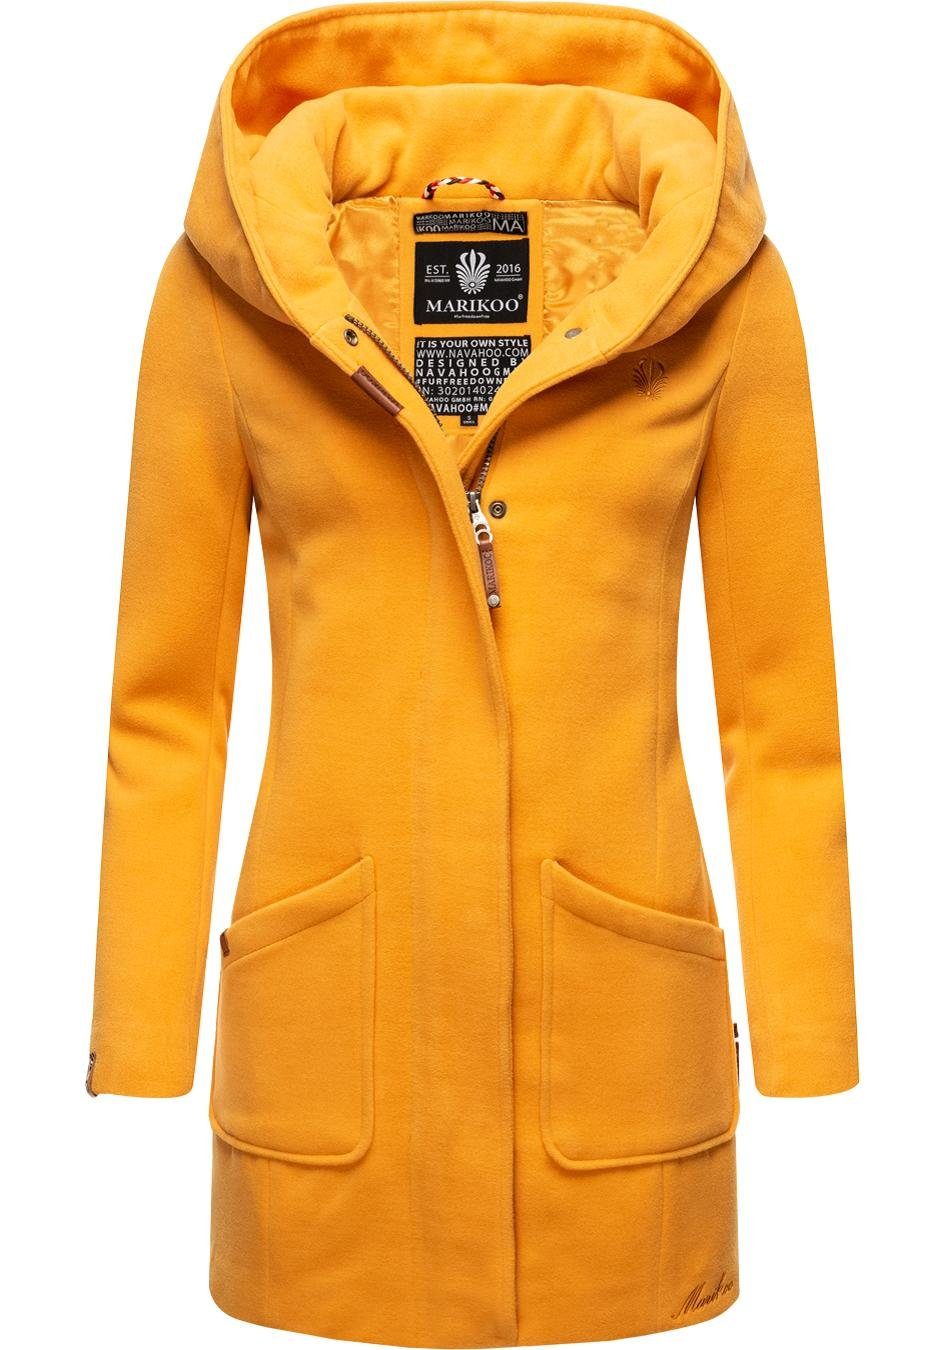 mit großer Mantel gelb Wintermantel Kapuze hochwertiger Marikoo Maikoo